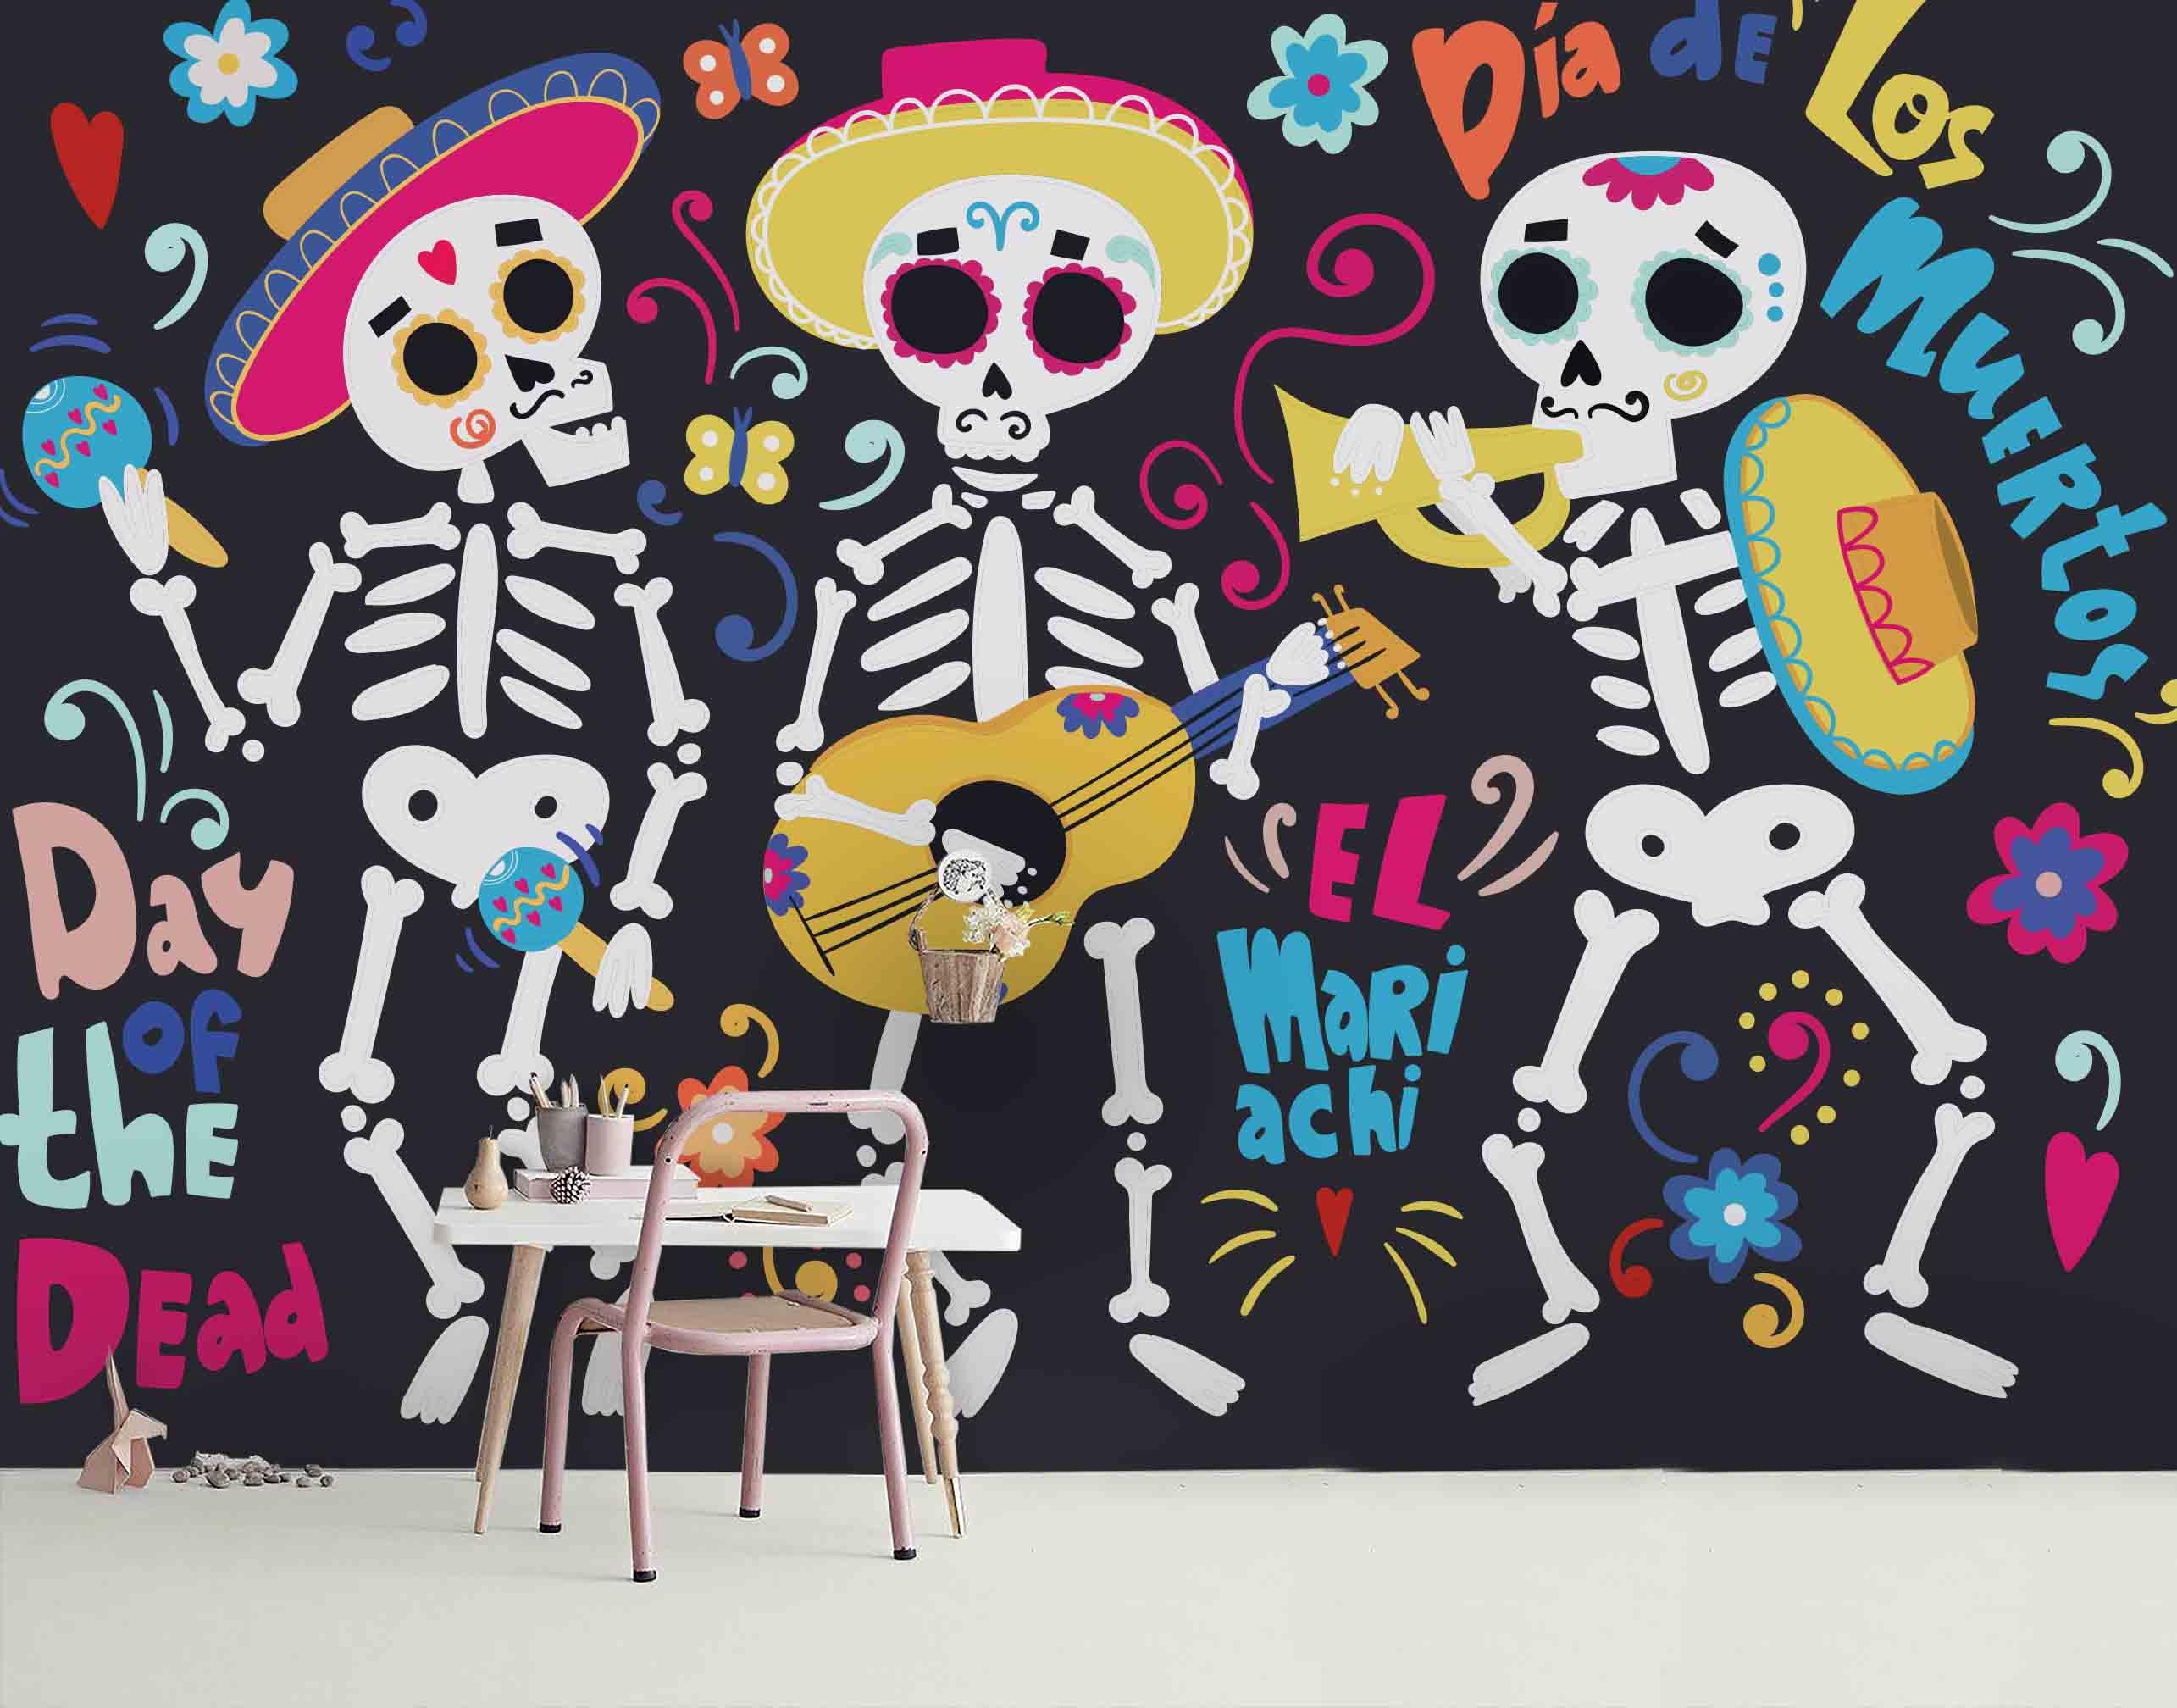 3D Skeleton Skull Guitar Wall Mural Wallpaper 77- Jess Art Decoration